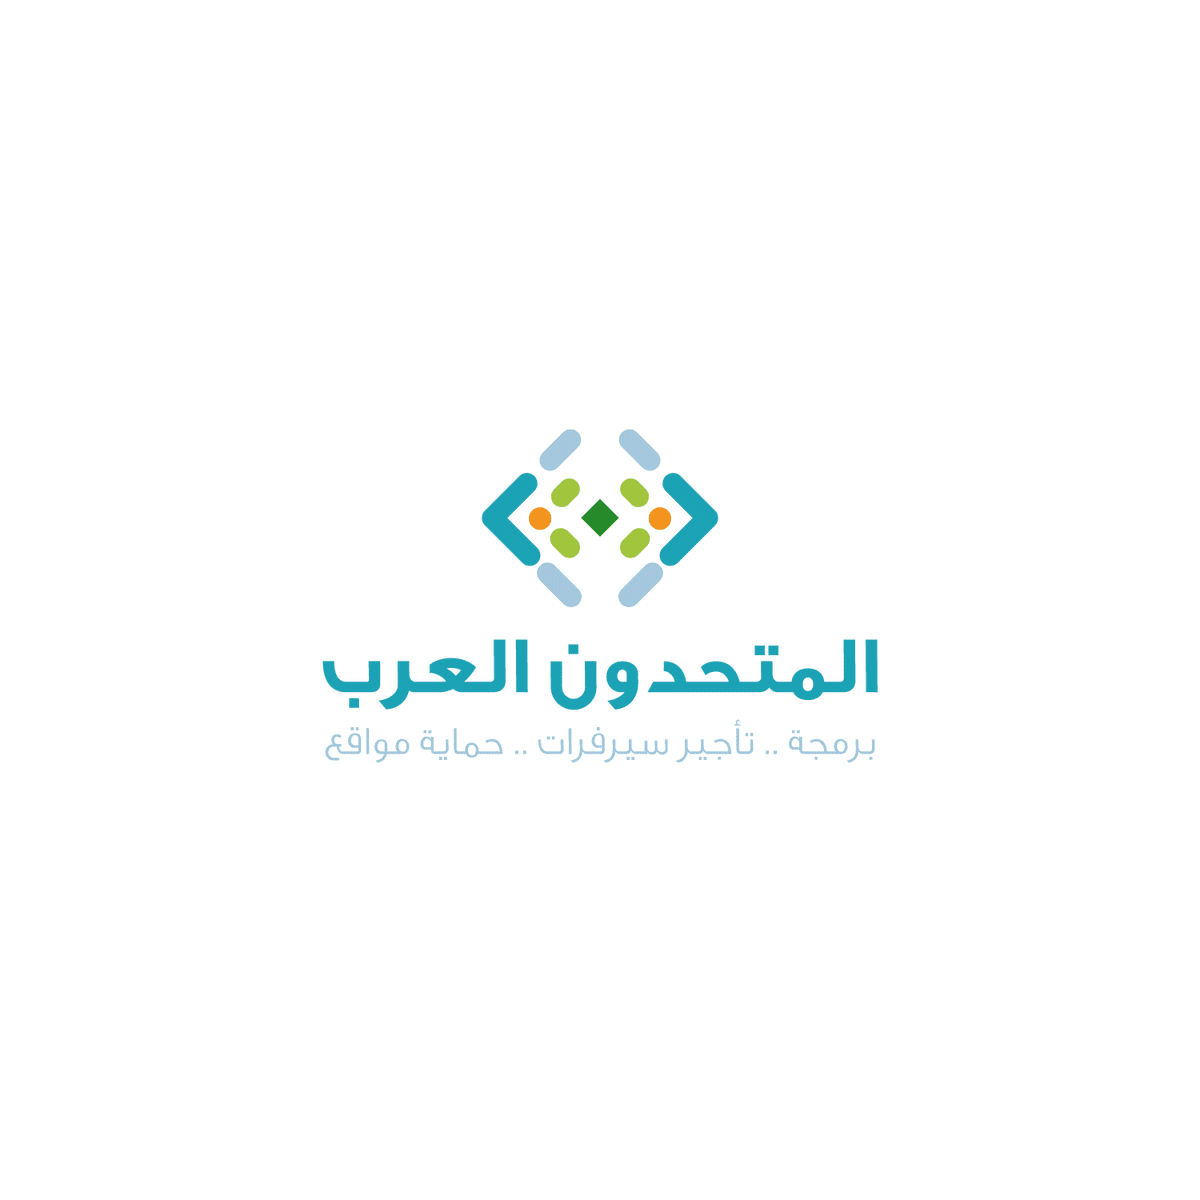  logo Al-Motahedon